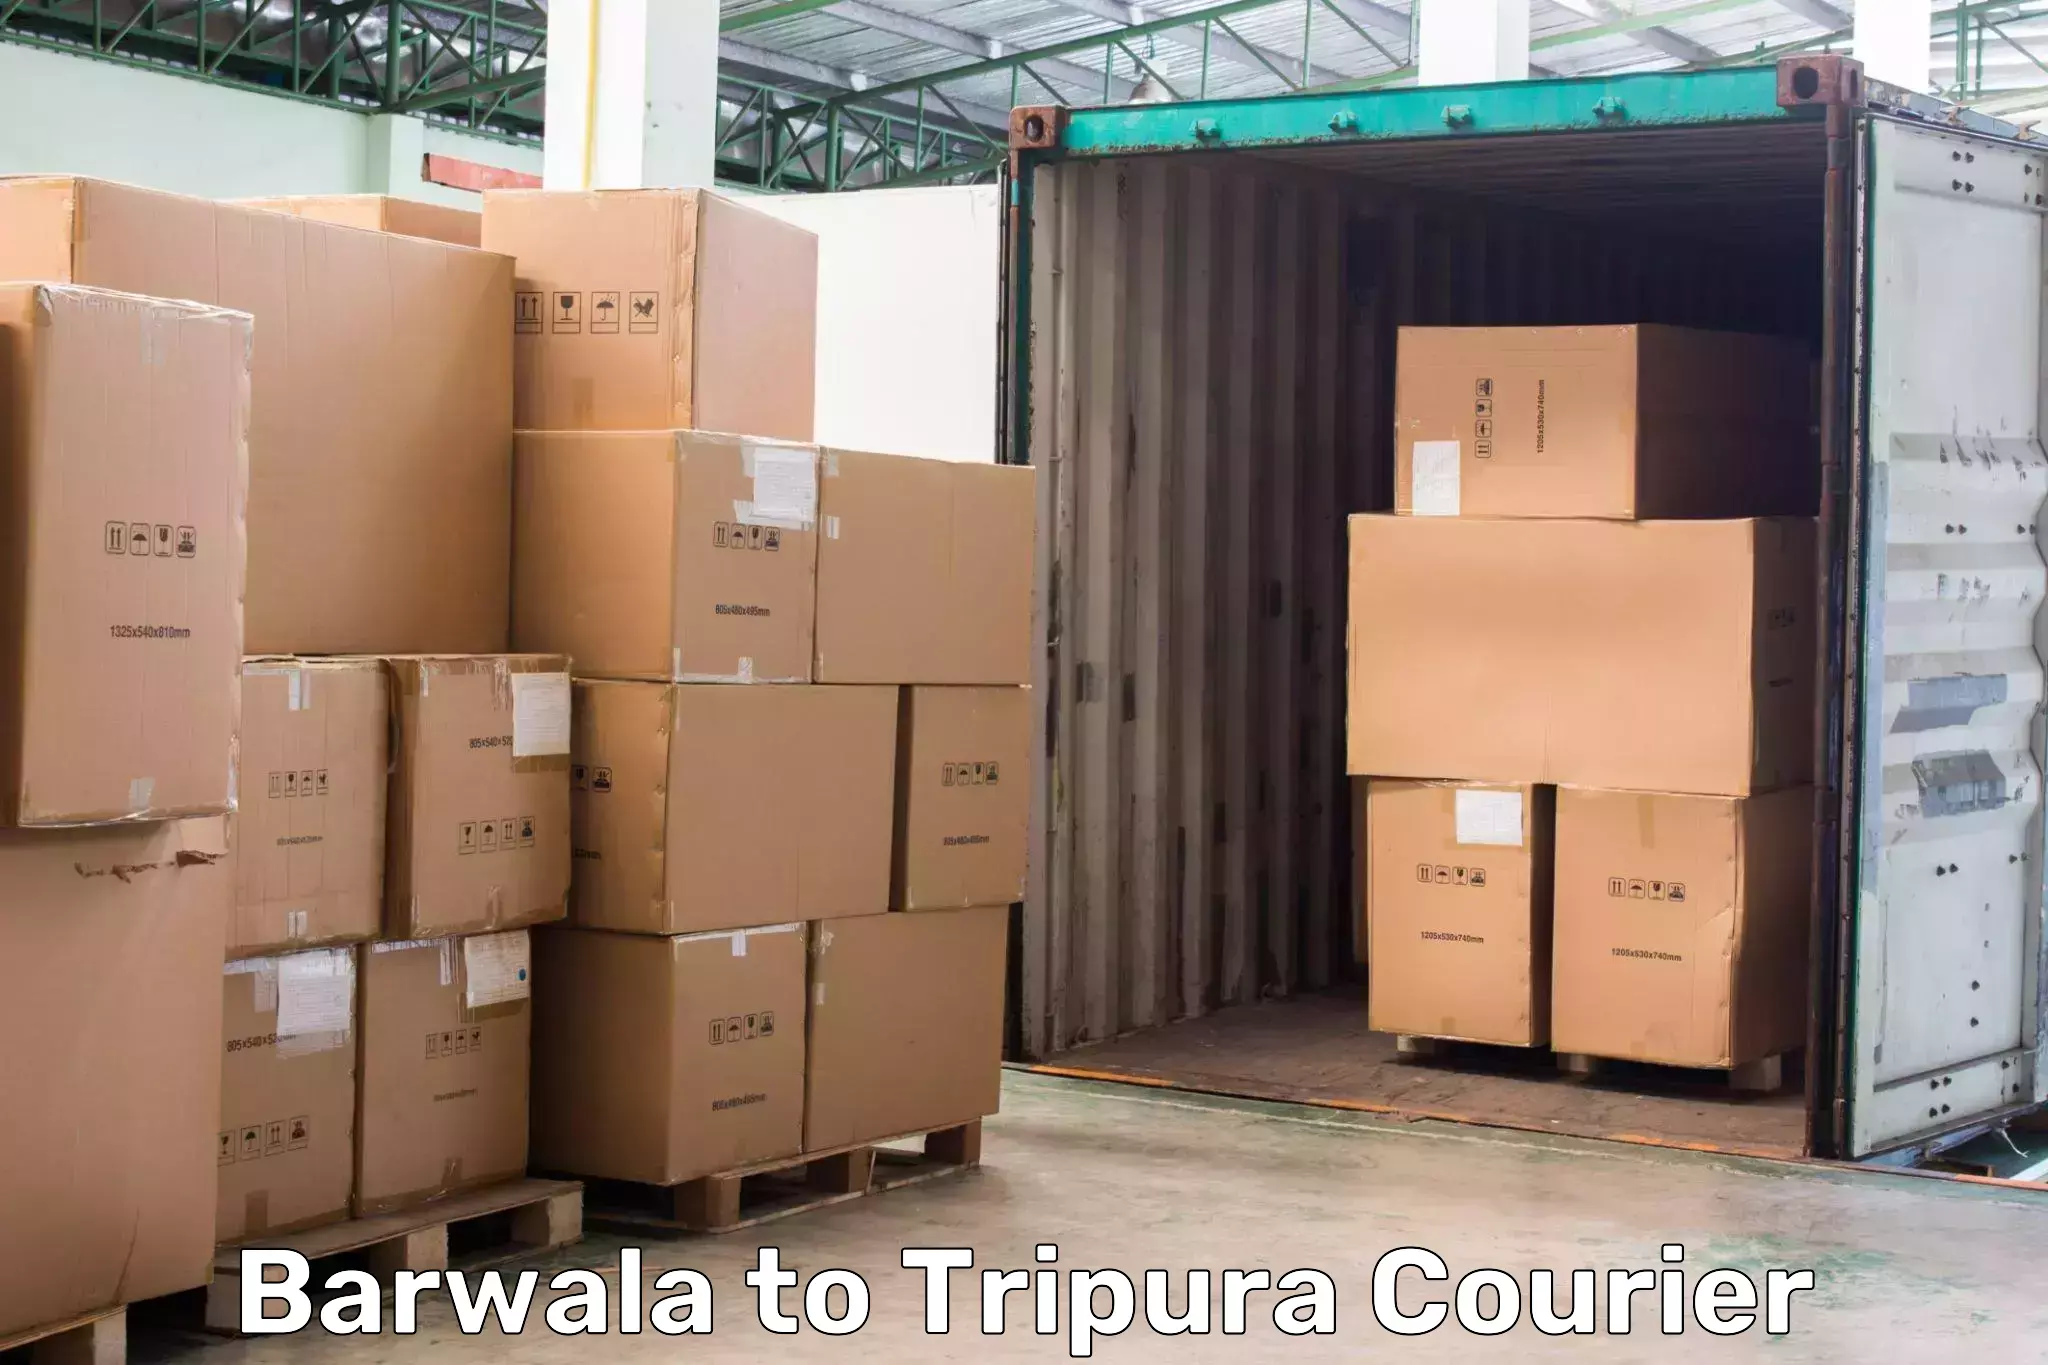 Courier service comparison Barwala to Udaipur Tripura